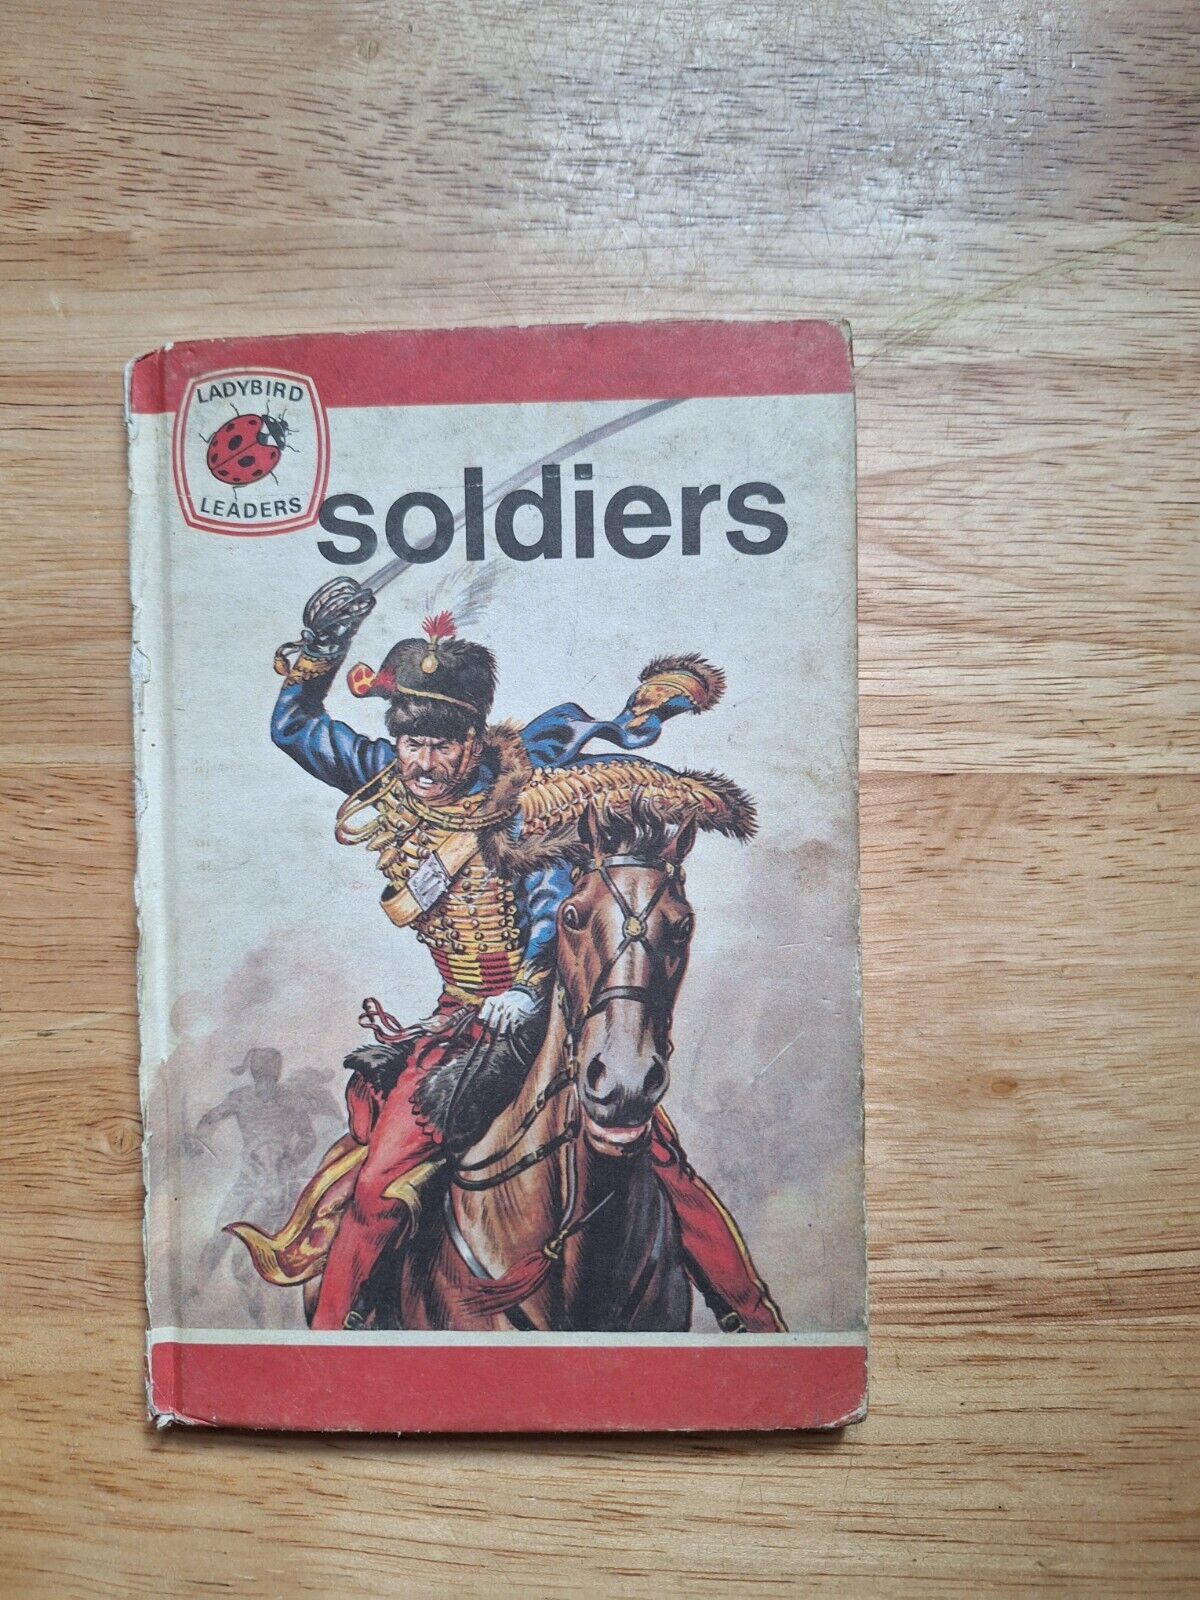 Vintage 1960s Soldier Ladybird book